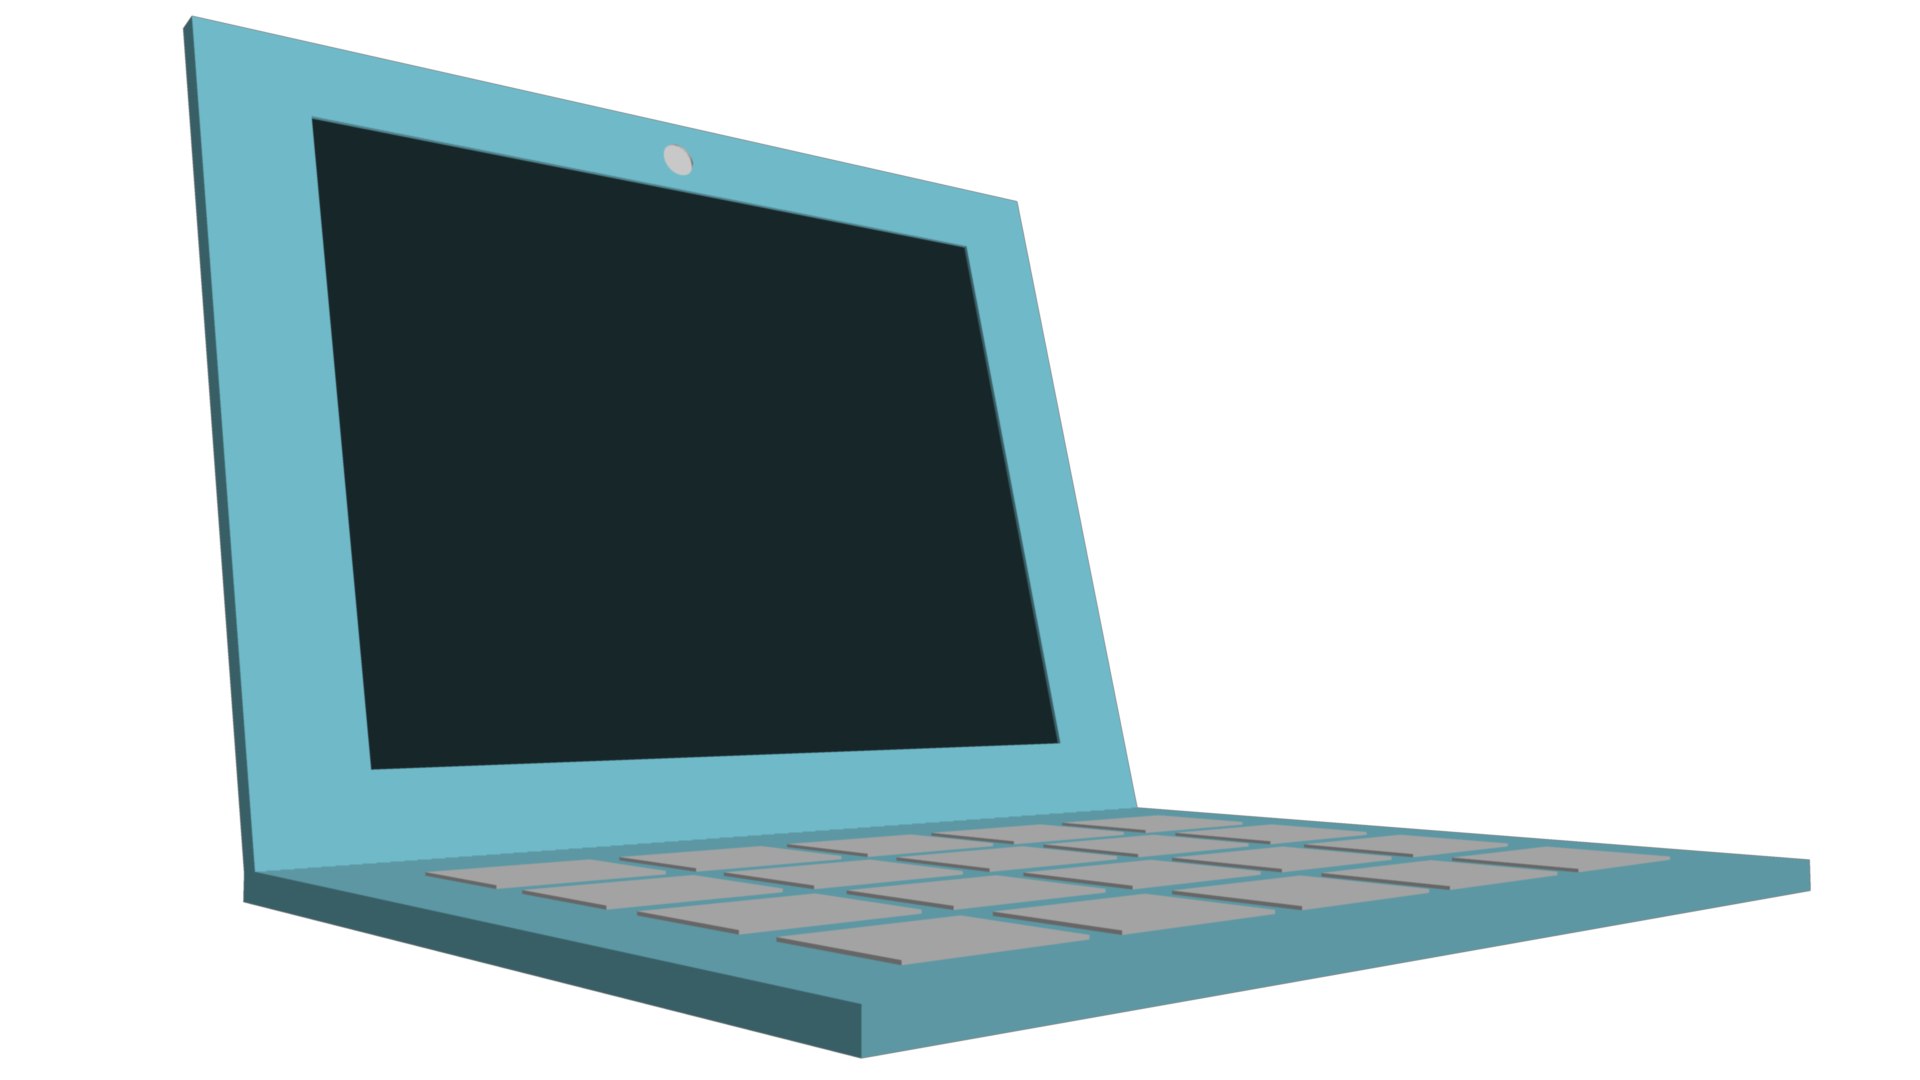 stylized laptop computer 3d model